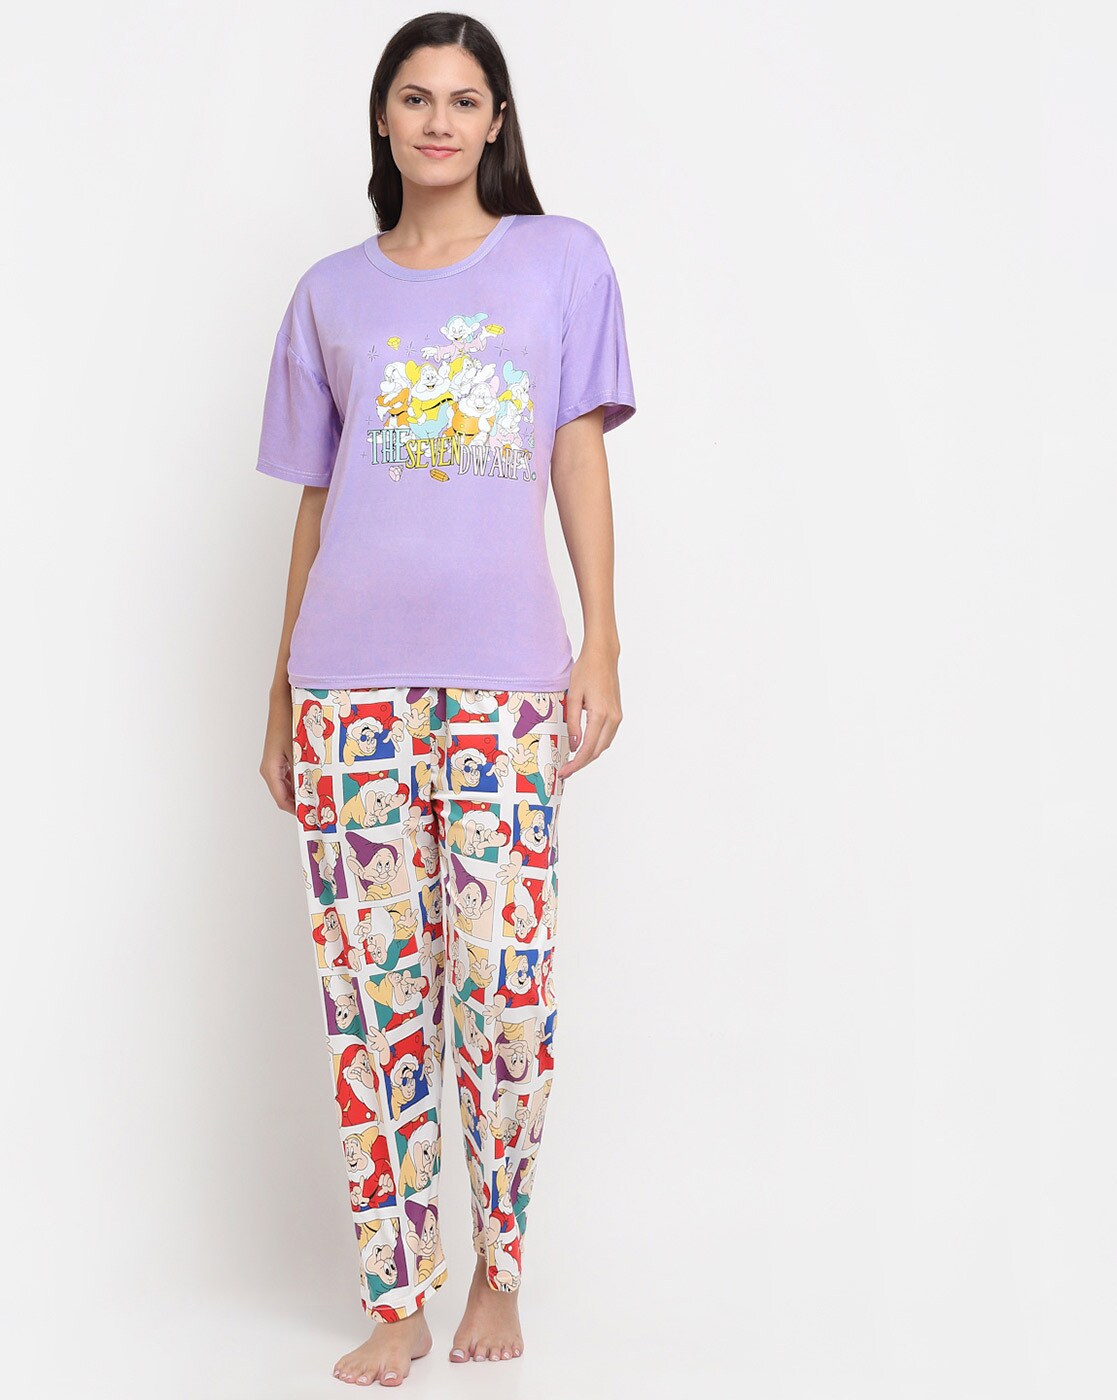 Buy Lavender Track Pants for Women by SJ SLUMBER JILL Online